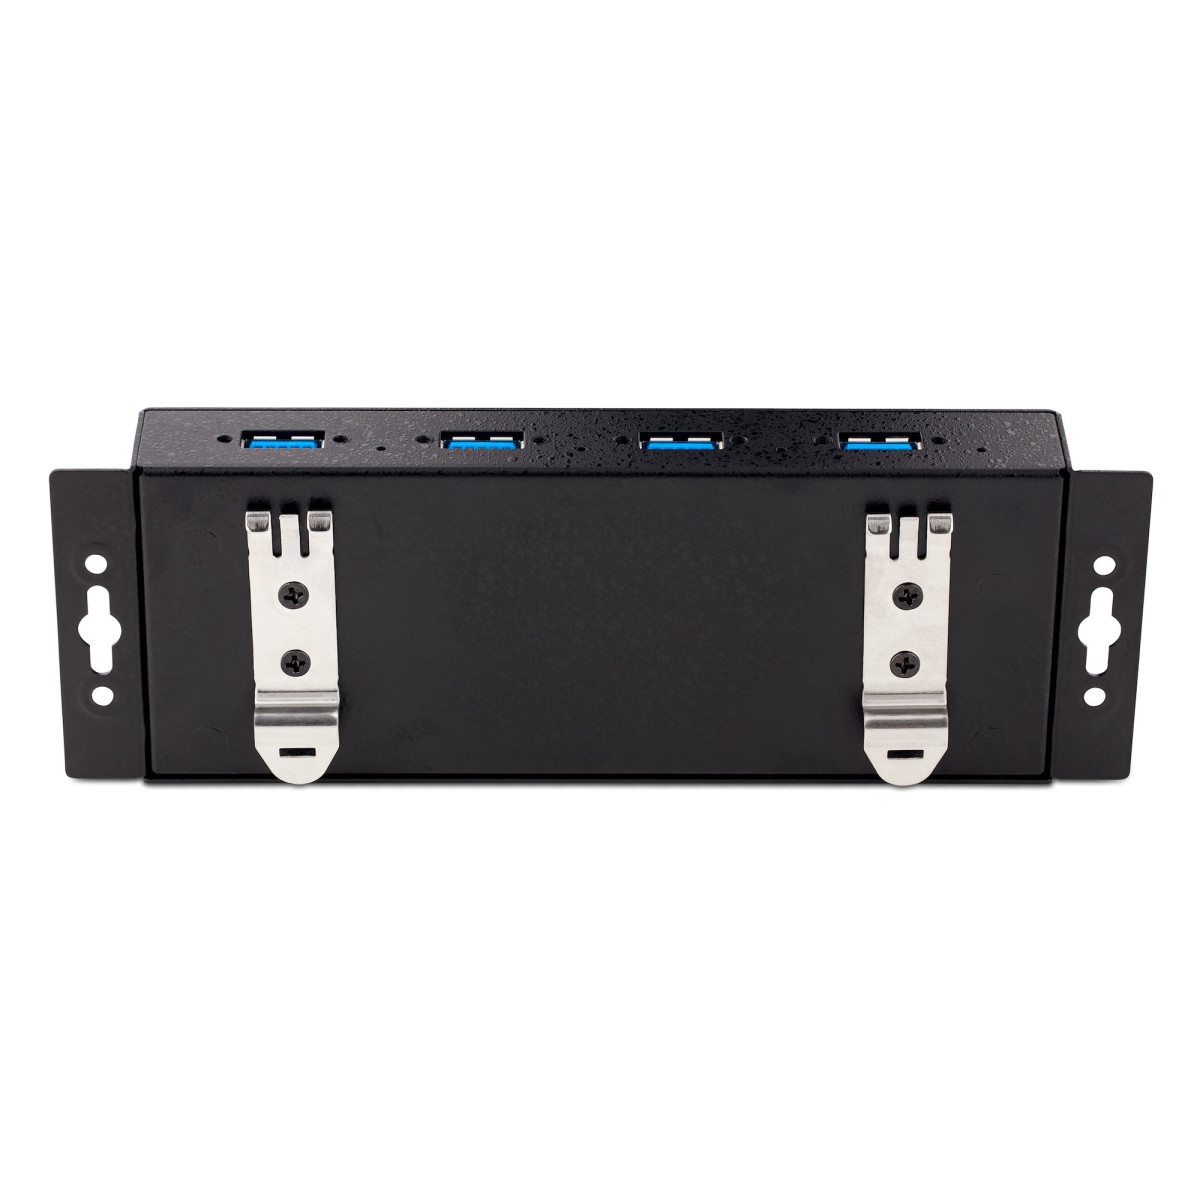 4-Port Industrial USB 3.0 Hub Metal